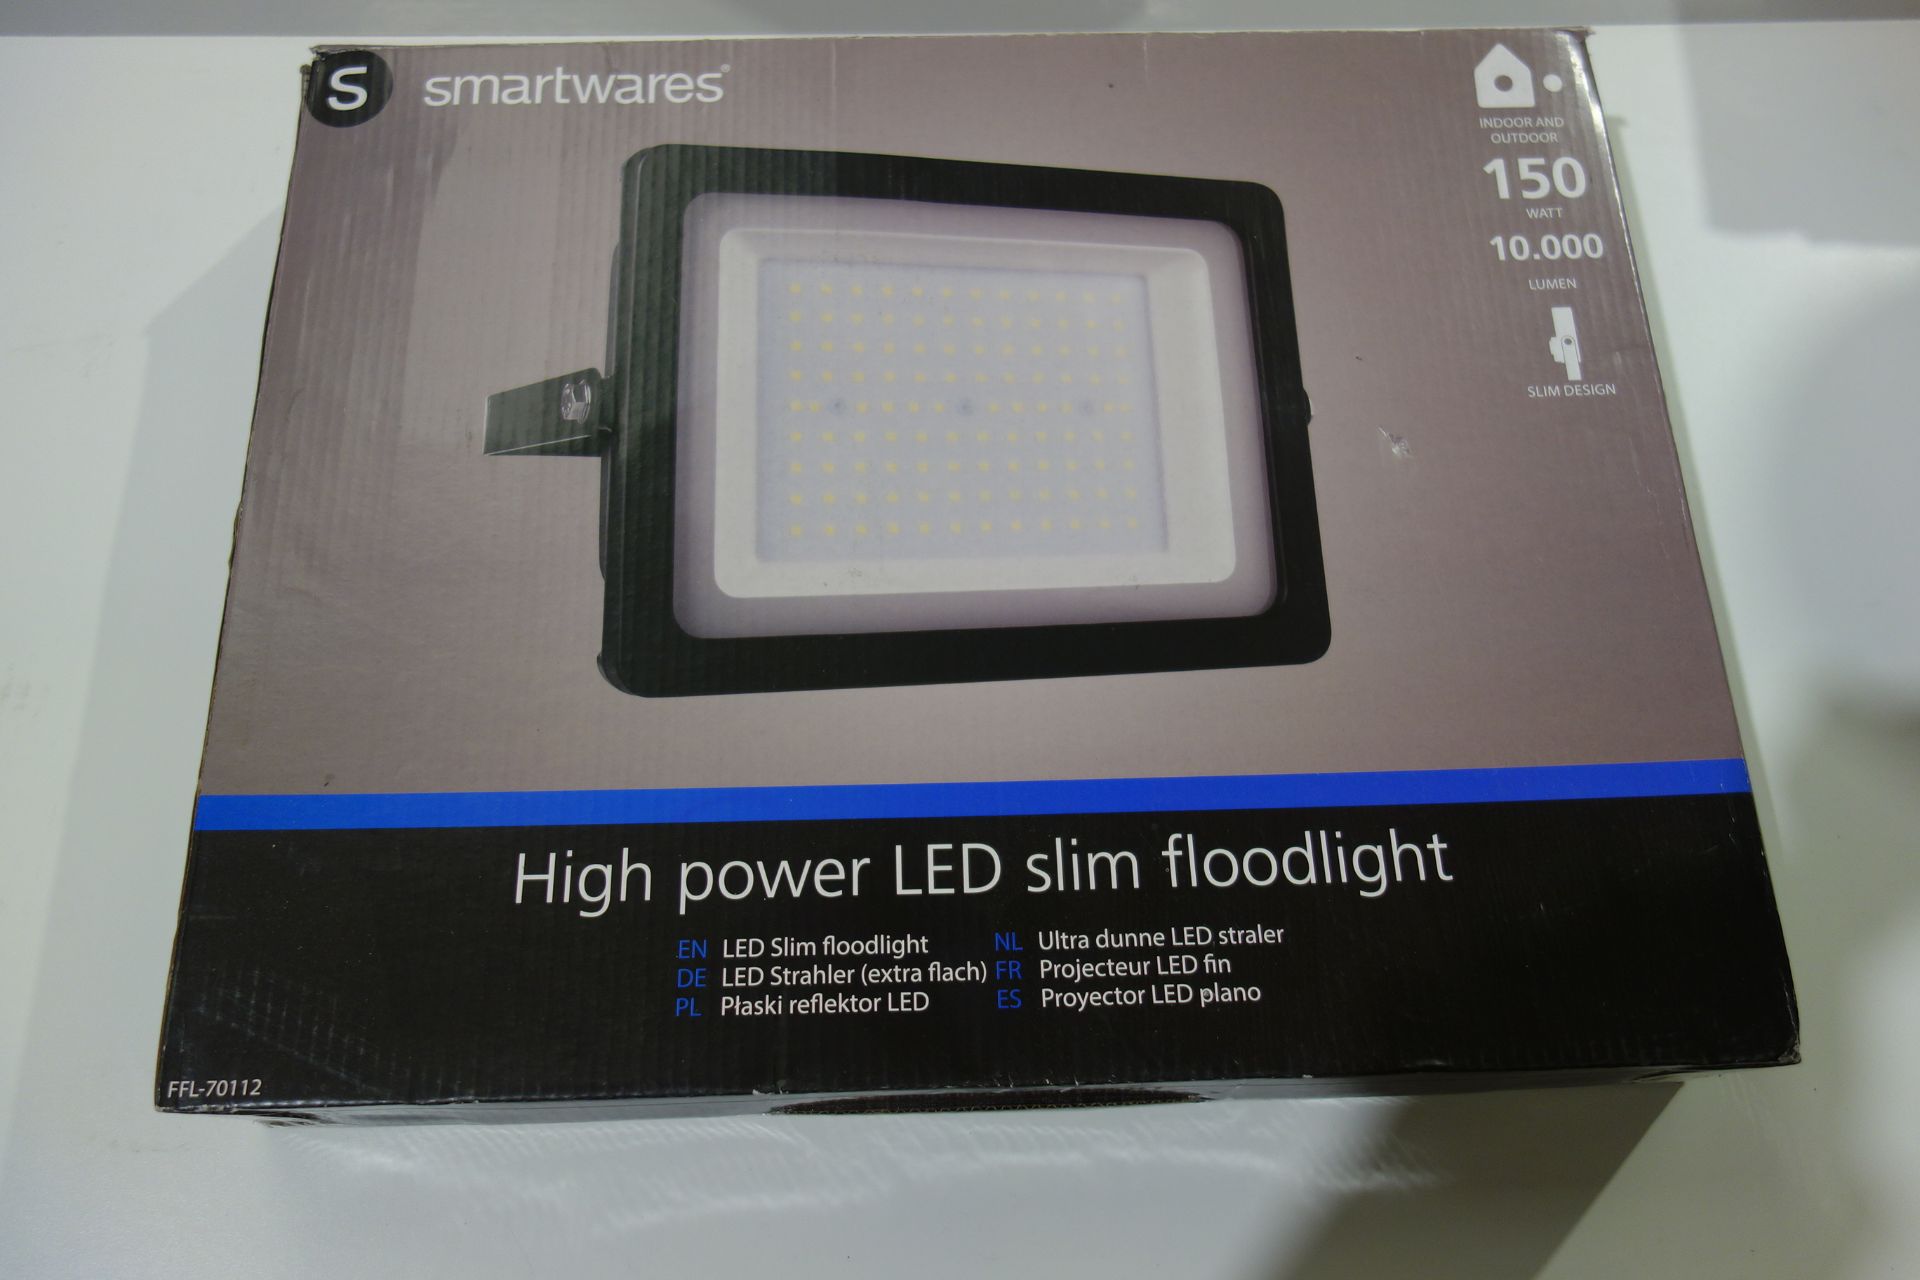 2 x Smartware FFL -70112 150w LED High Power Floodlights 10,000 Lumen Black Finish